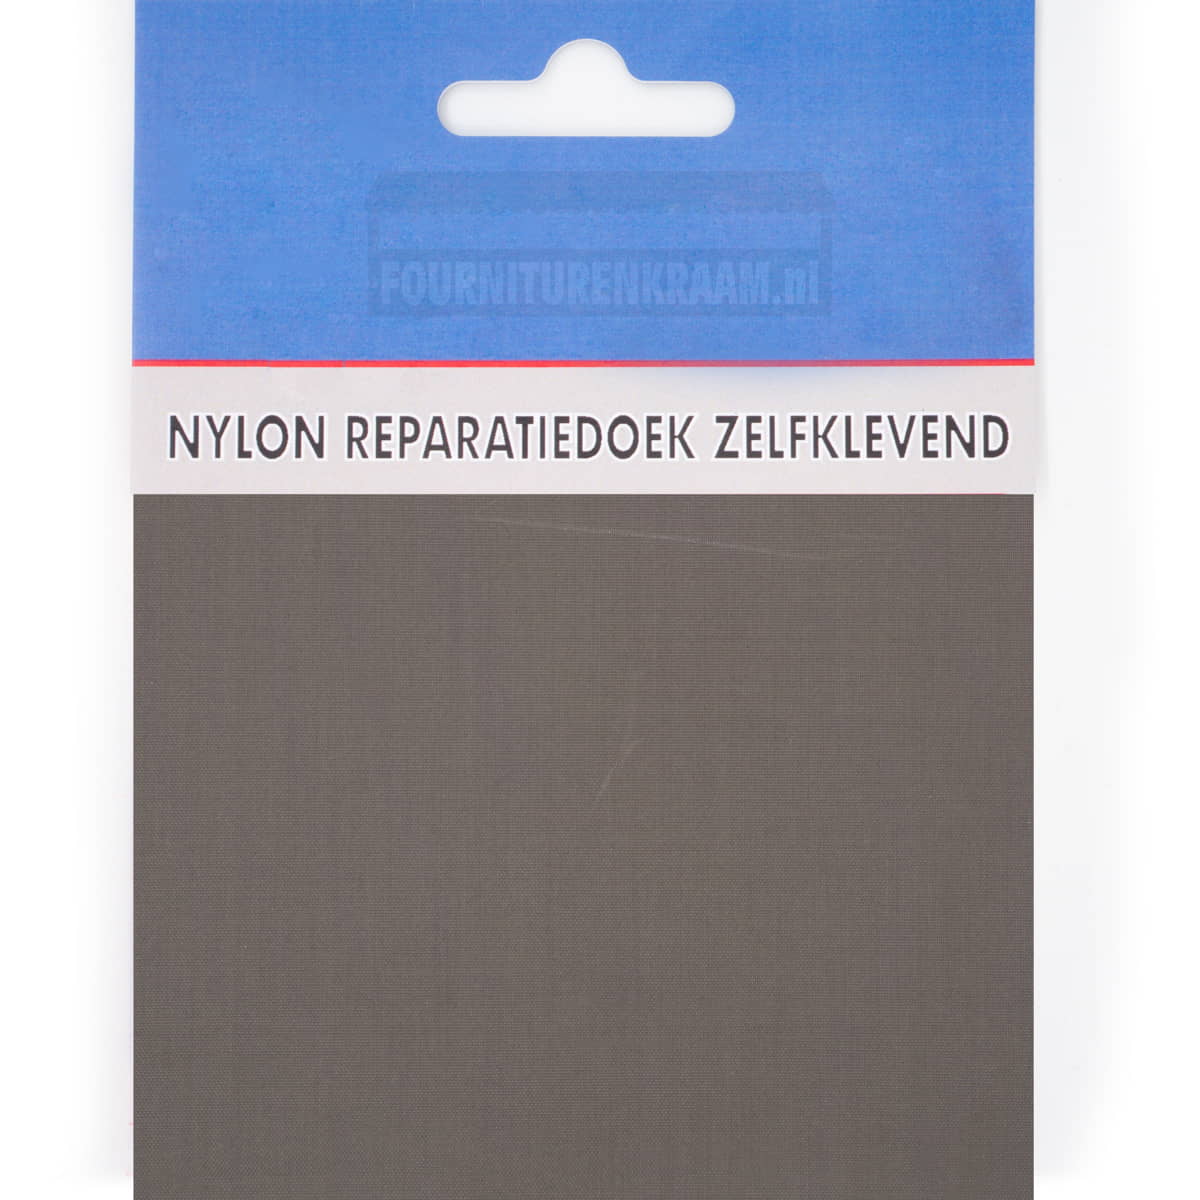 Zelfklevend repartiedoek huismerk | Nylon | 10 x 20 cm | donker grijs NYLON-1114-03